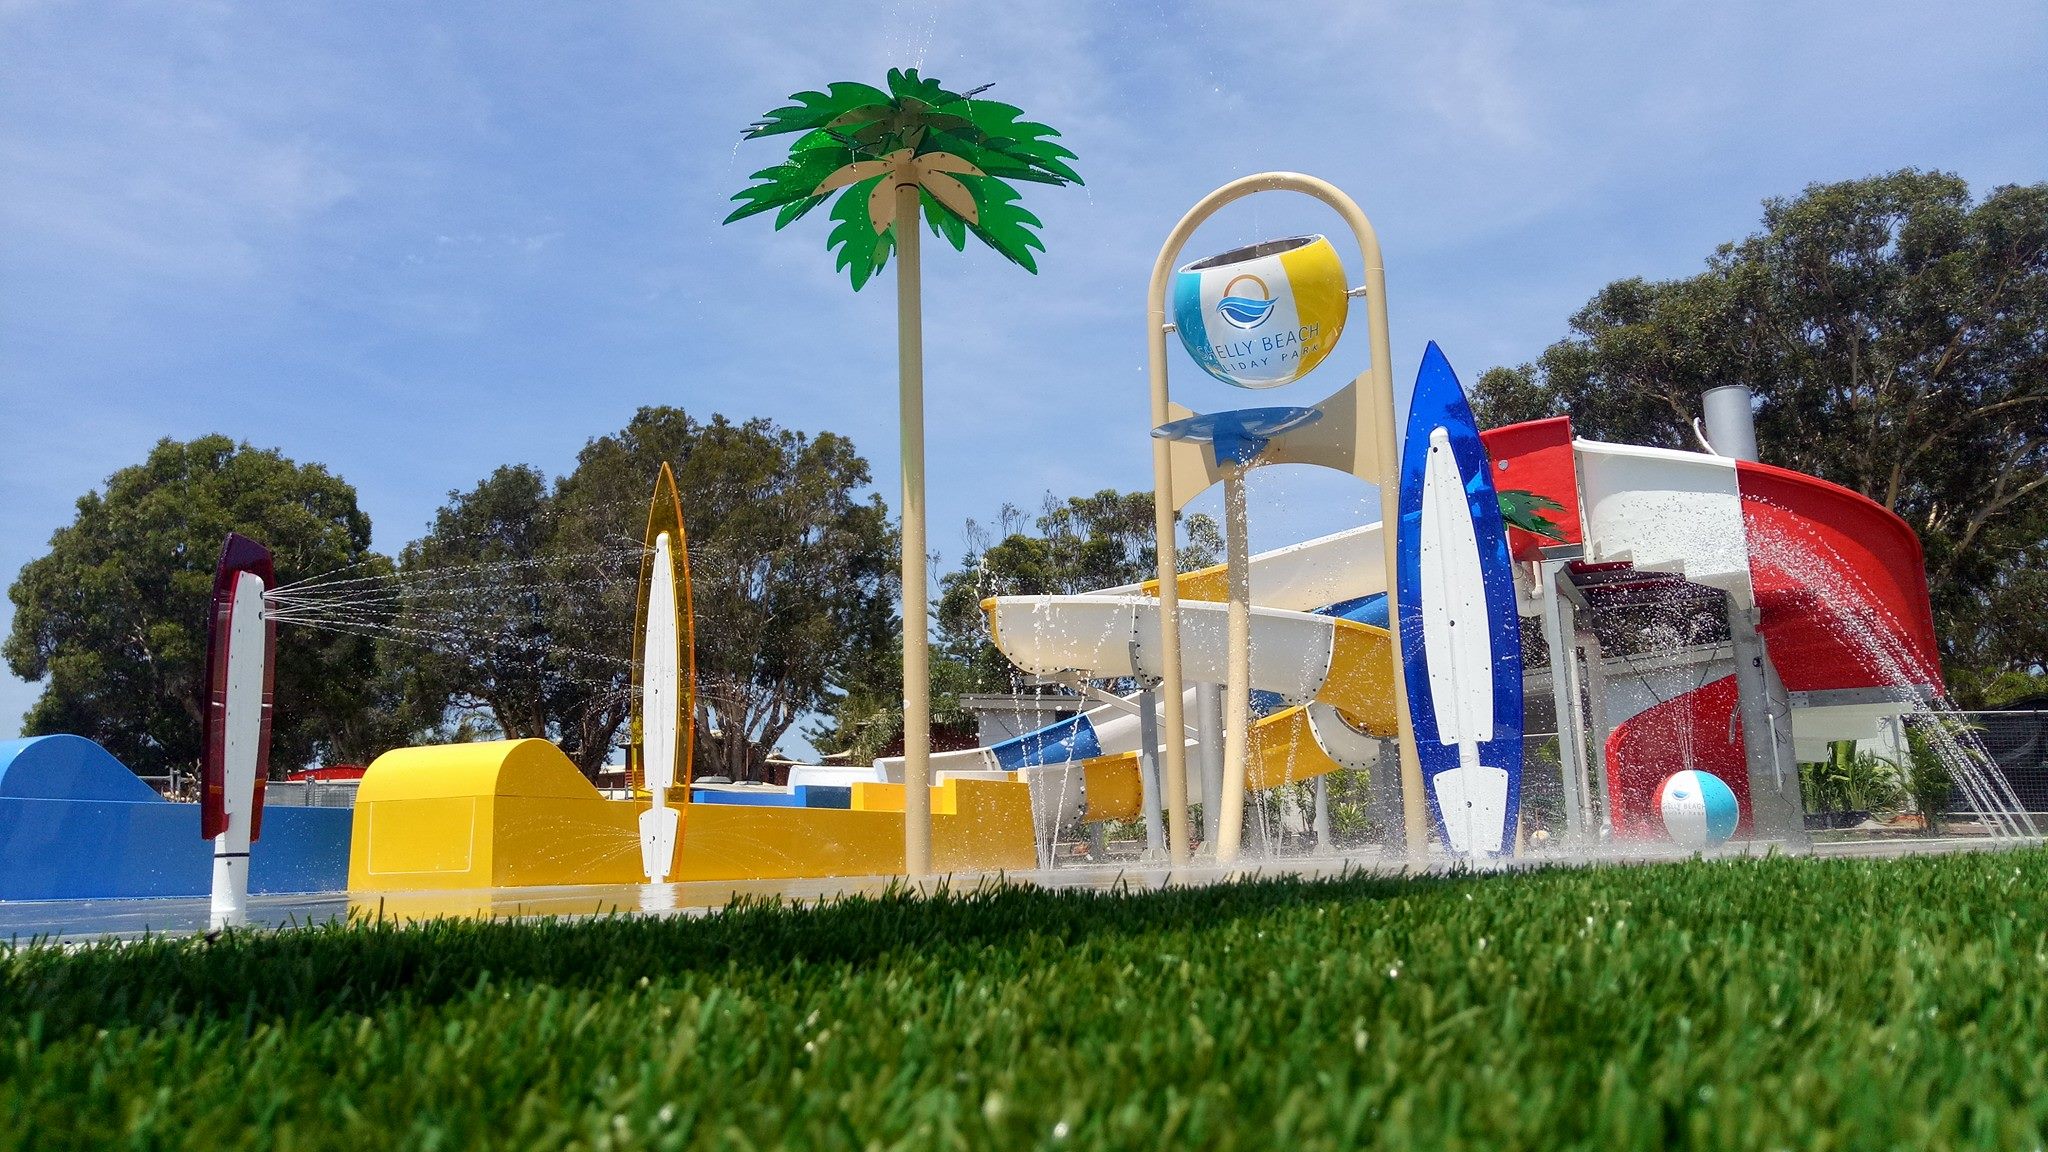 Dcb Garden Salon De Jardin Beau Shelly Beach Holiday Park In Sydney Amusement Parks